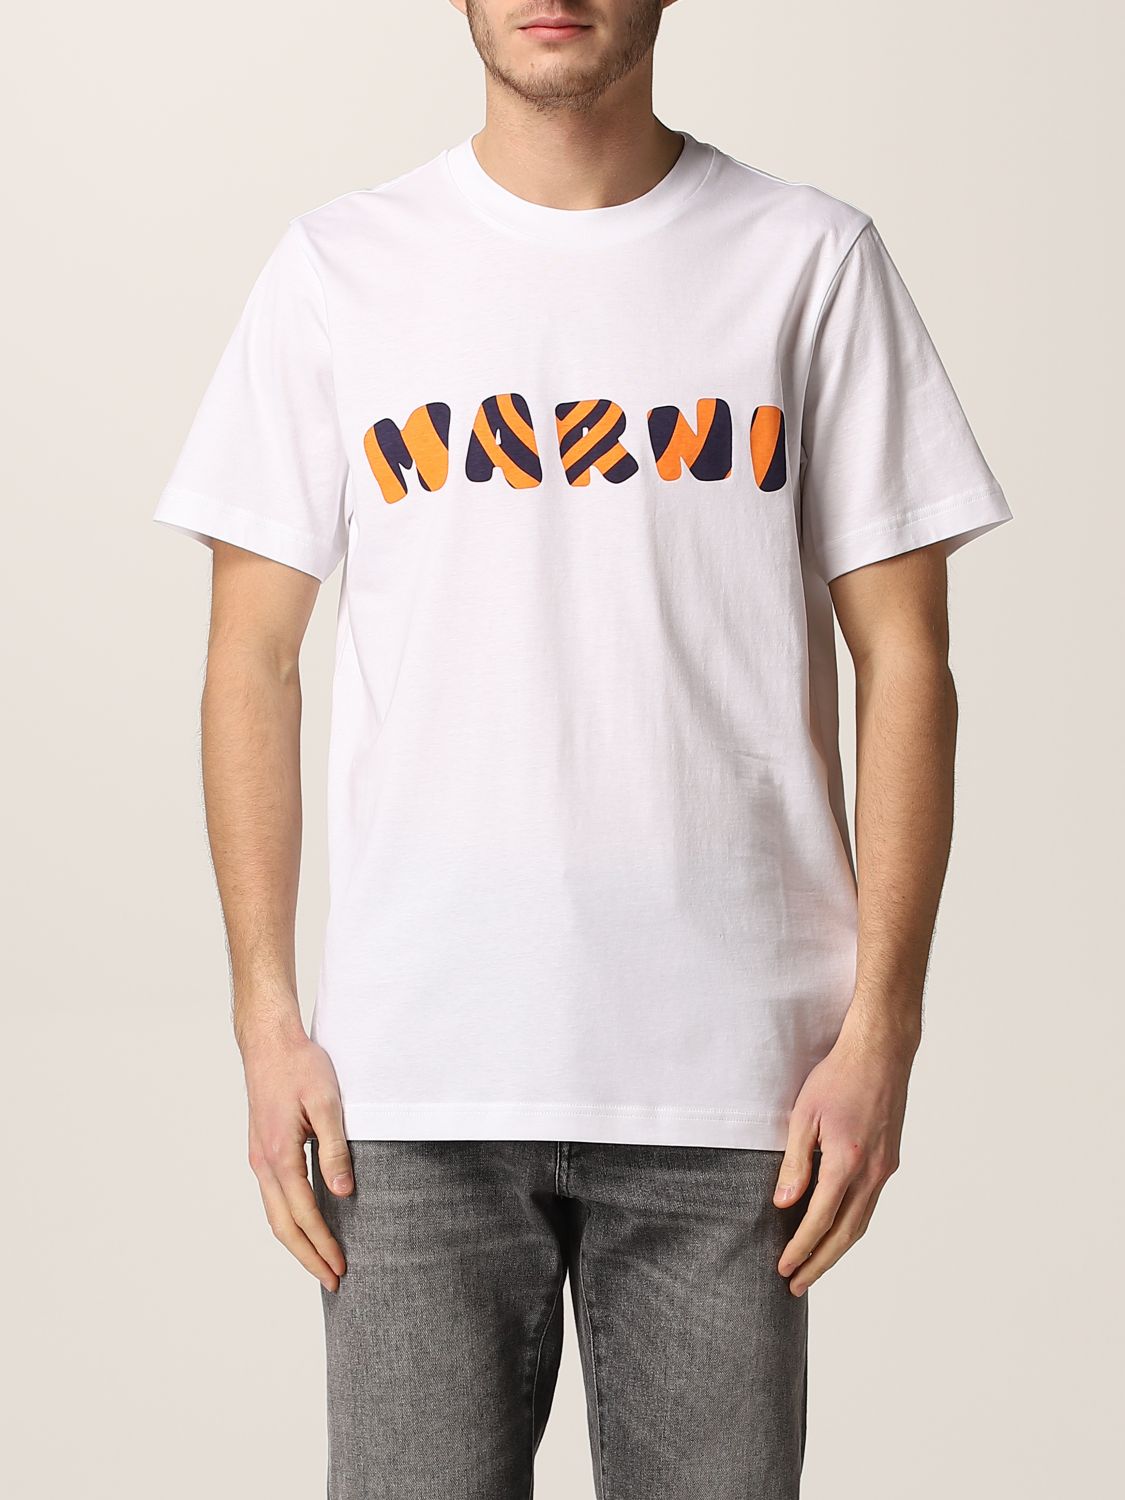 MARNI: cotton t-shirt with logo - White | Marni t-shirt